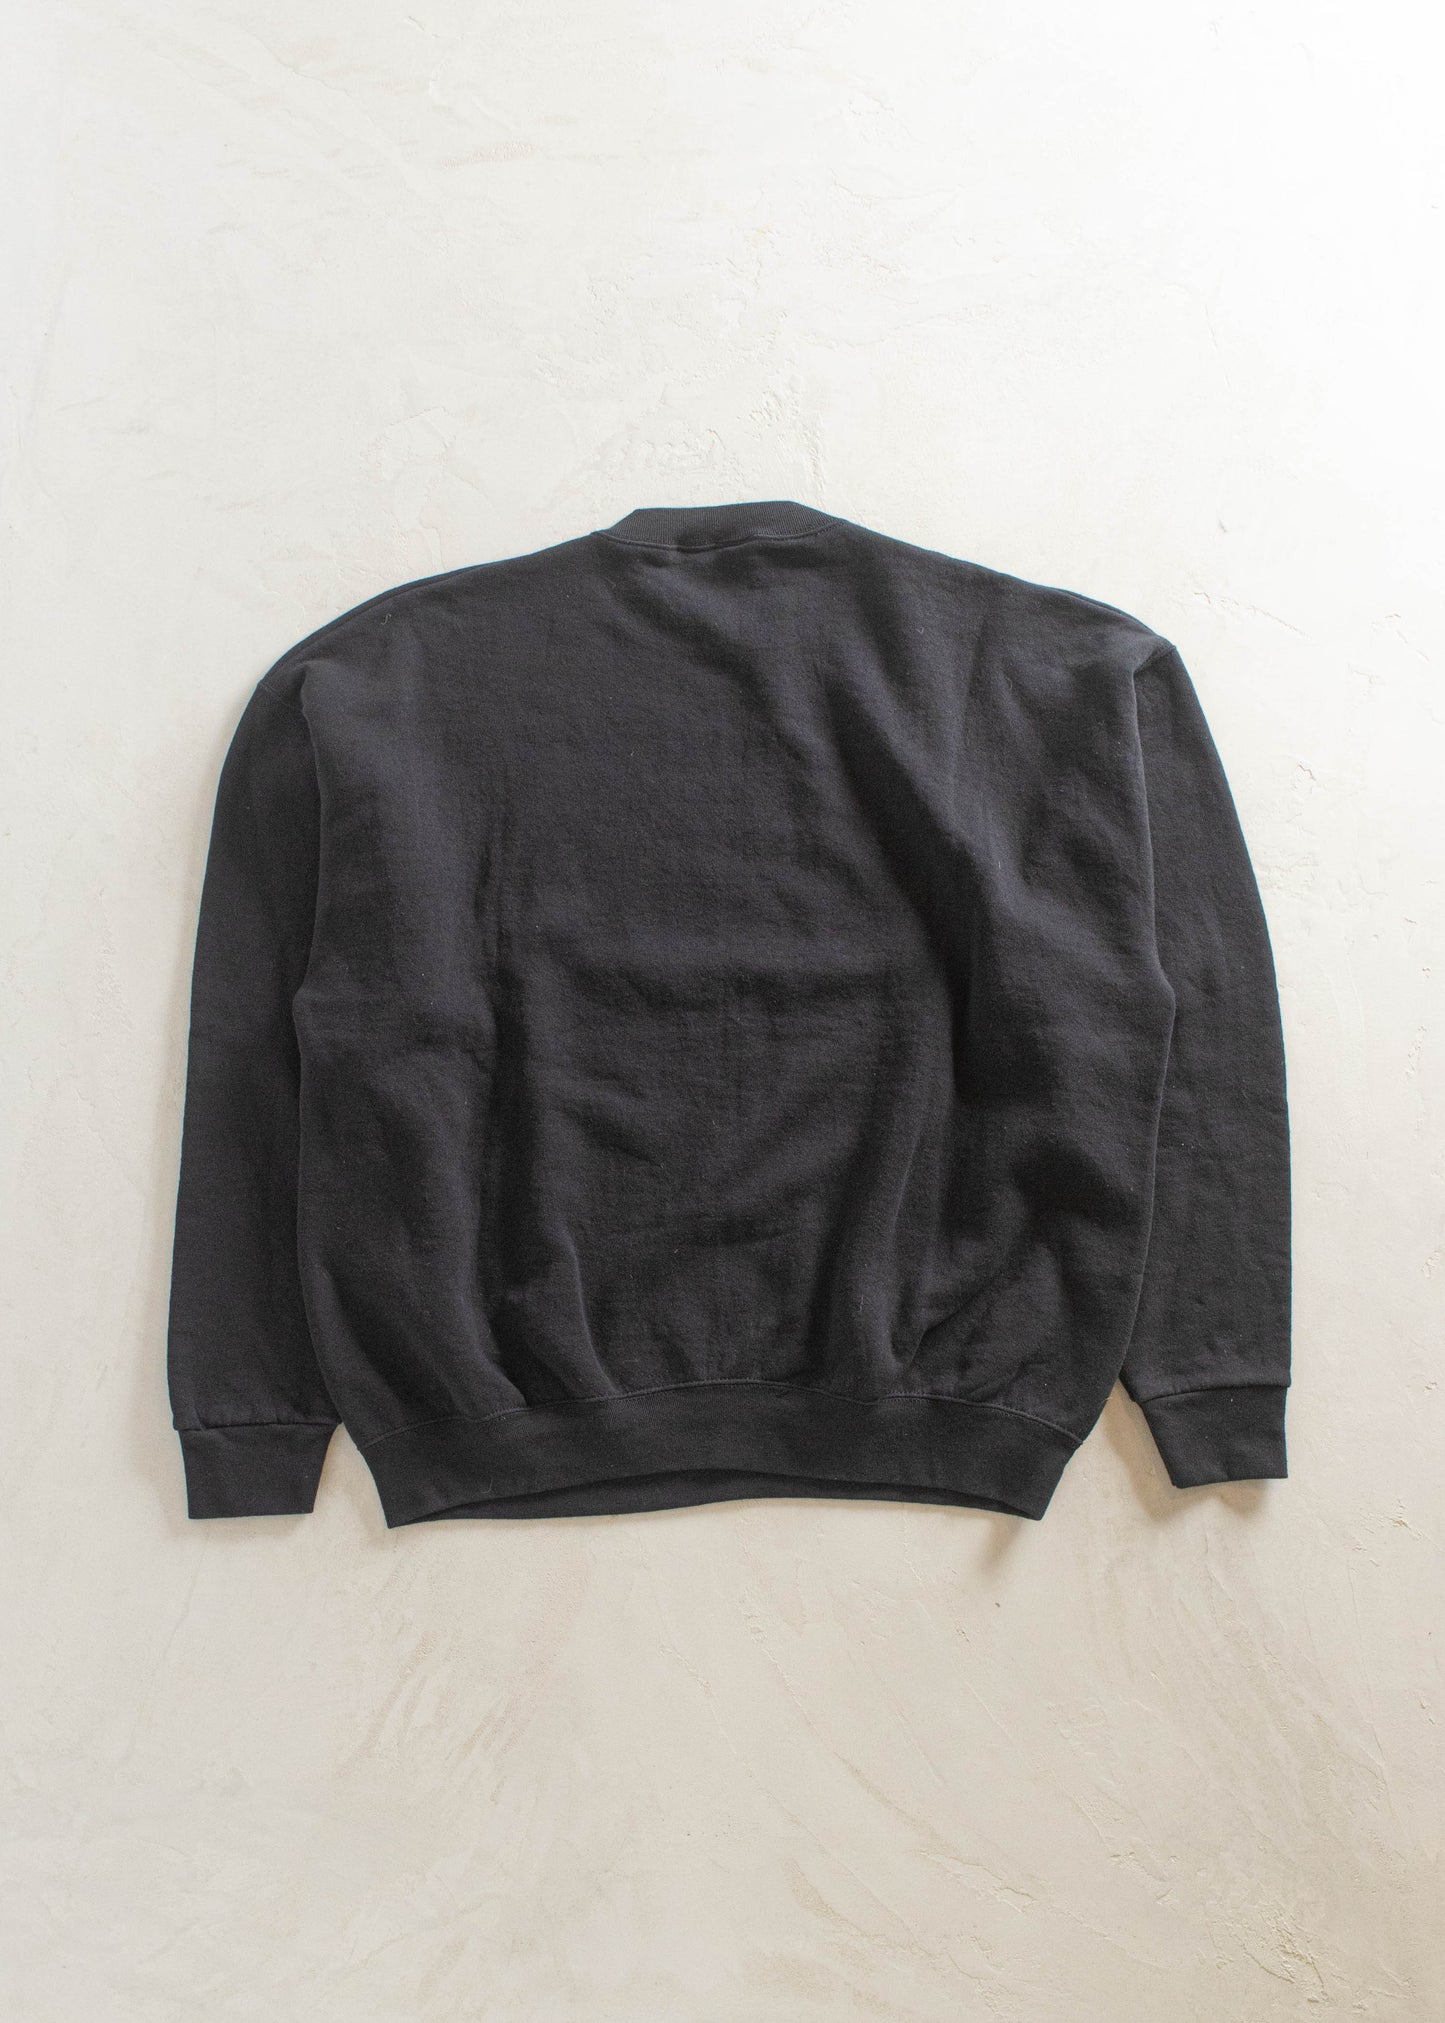 1990s Salisbury Center New York Sweatshirt Size XL/2XL